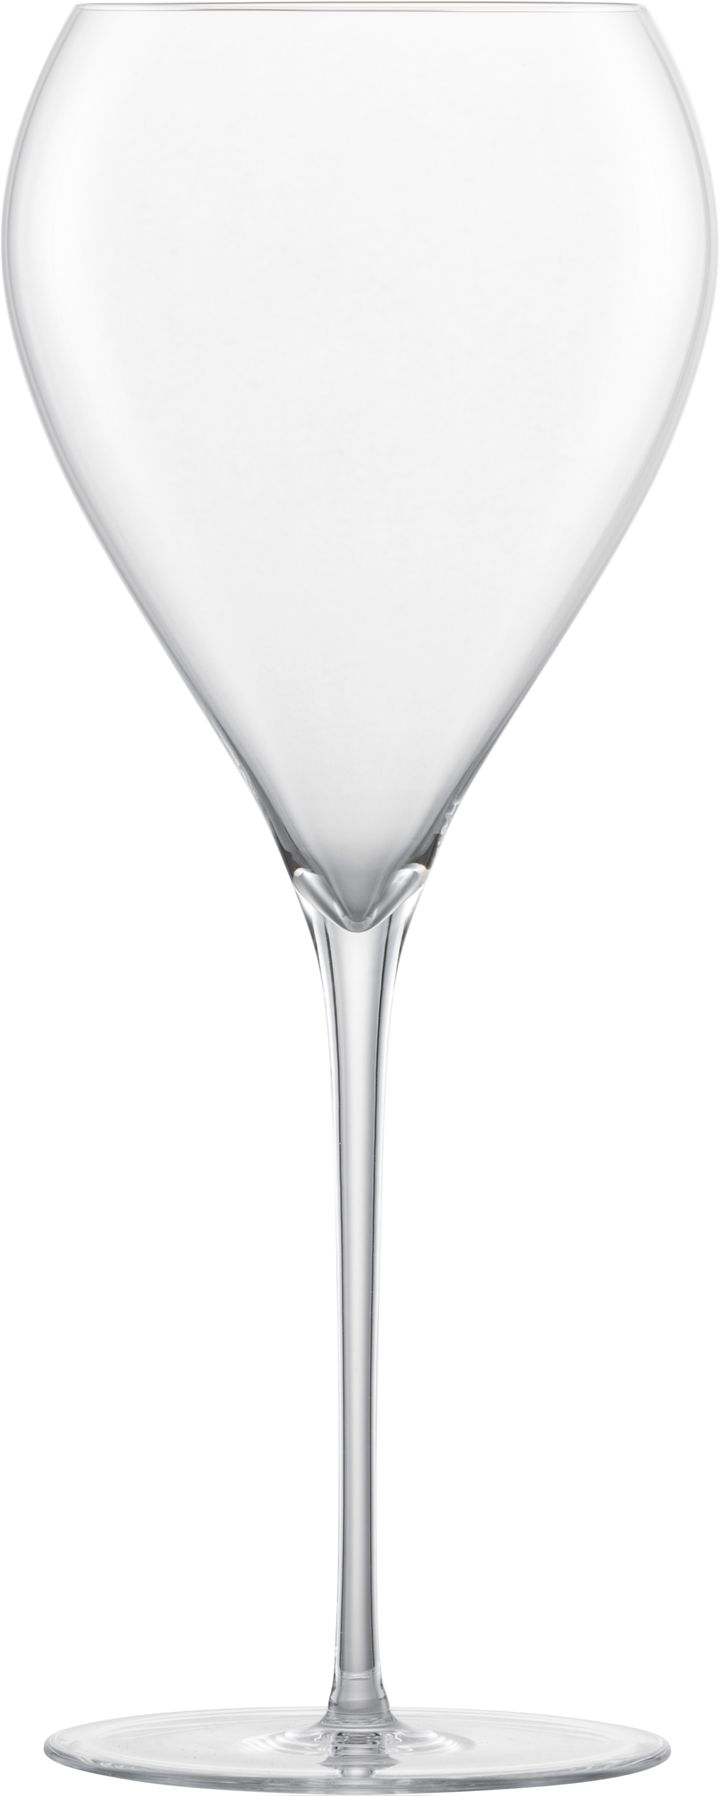 Enoteca Champagnerglas, 67 cl Zwiesel